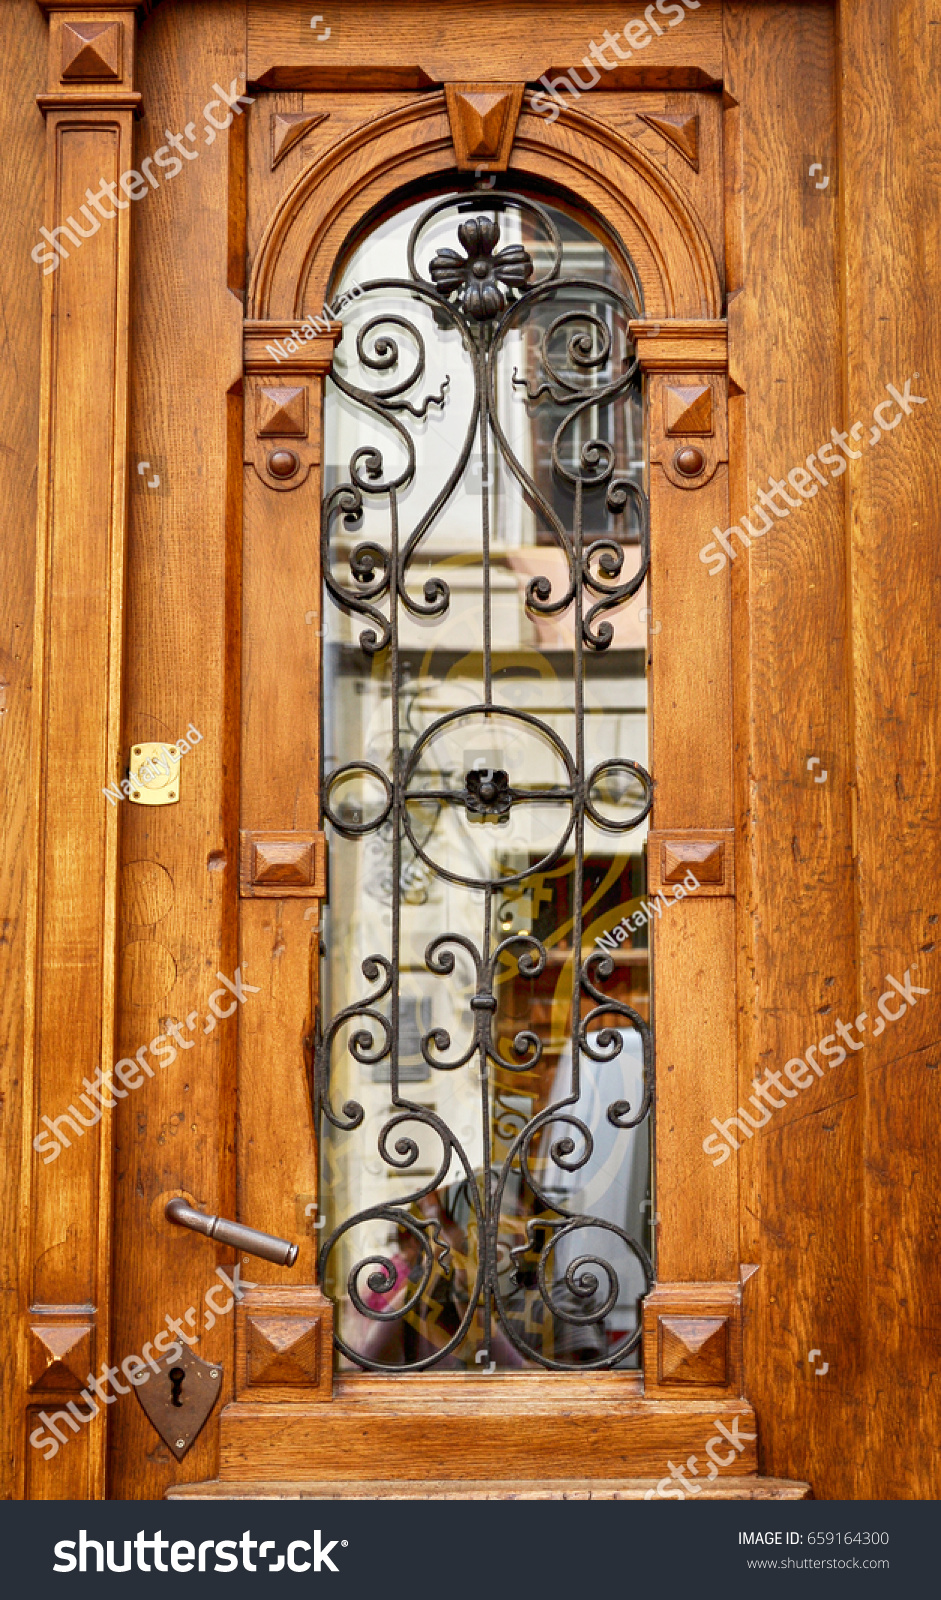 Wooden Doors Wrought Iron Grating Glass Stock Photo 659164300 | Shutterstock